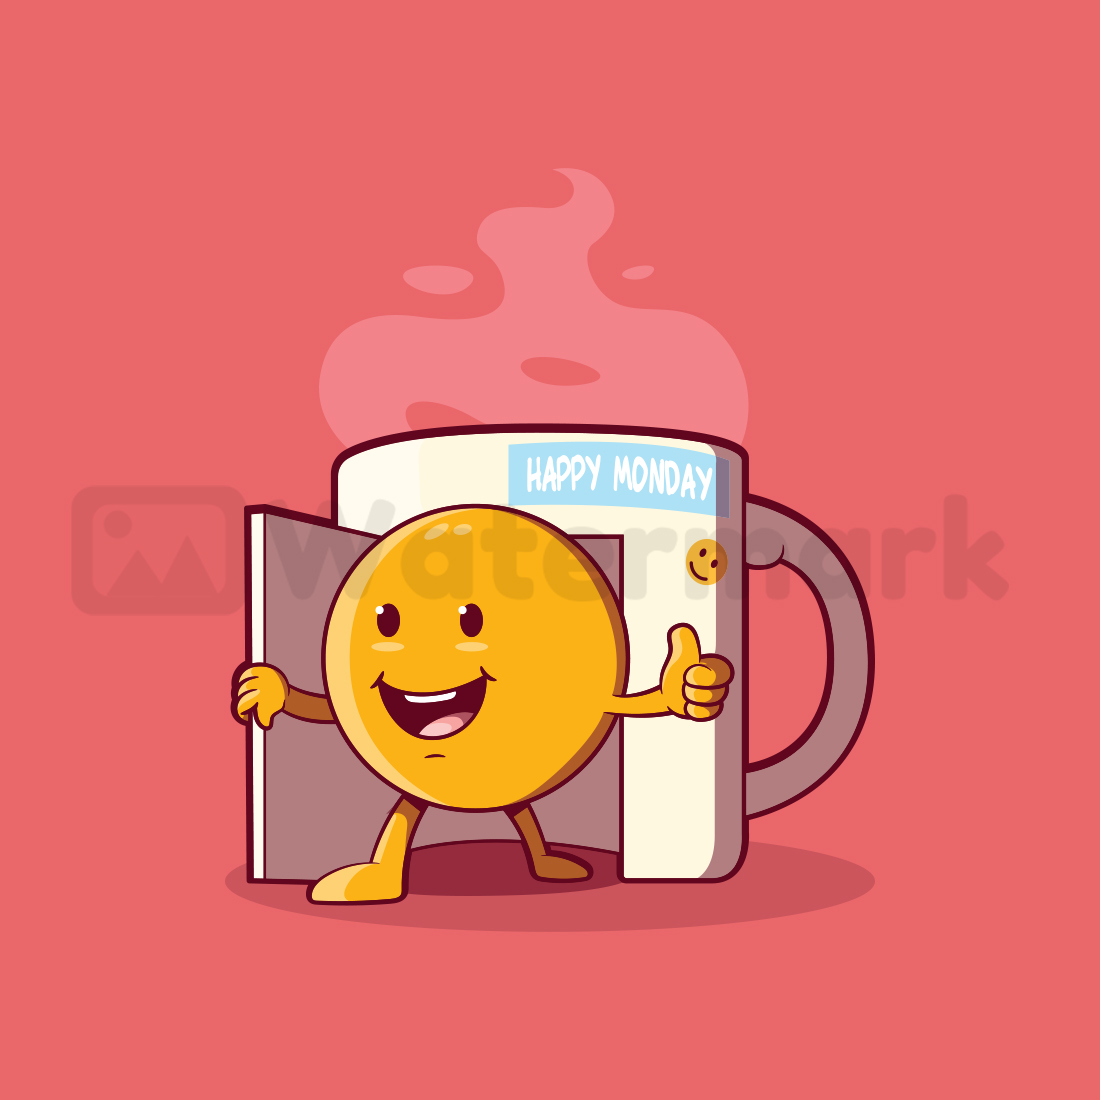 Happy Monday Emoji! preview image.